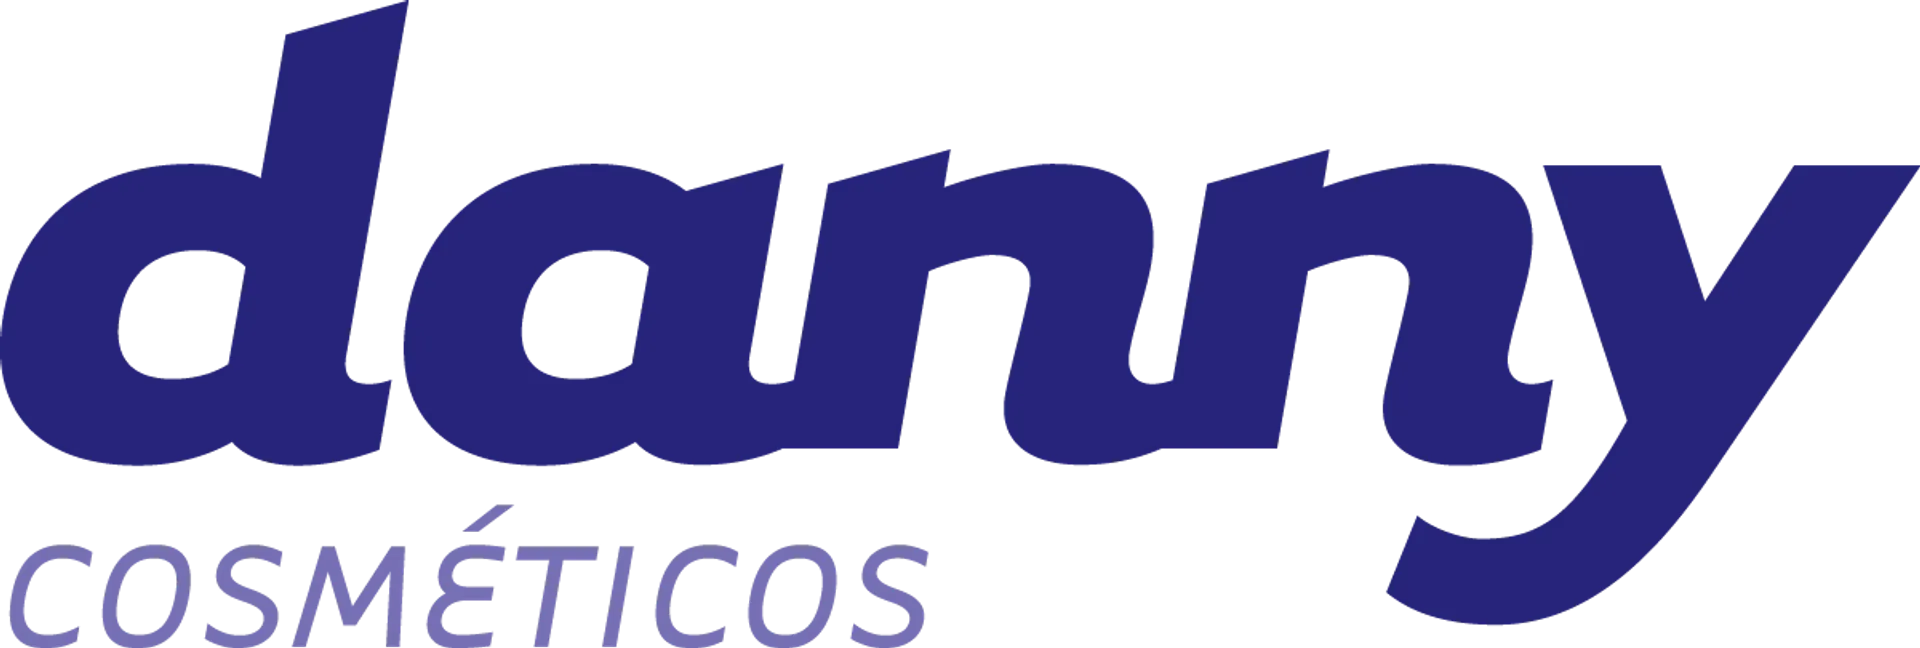 DANNY COSMÉTICOS logo